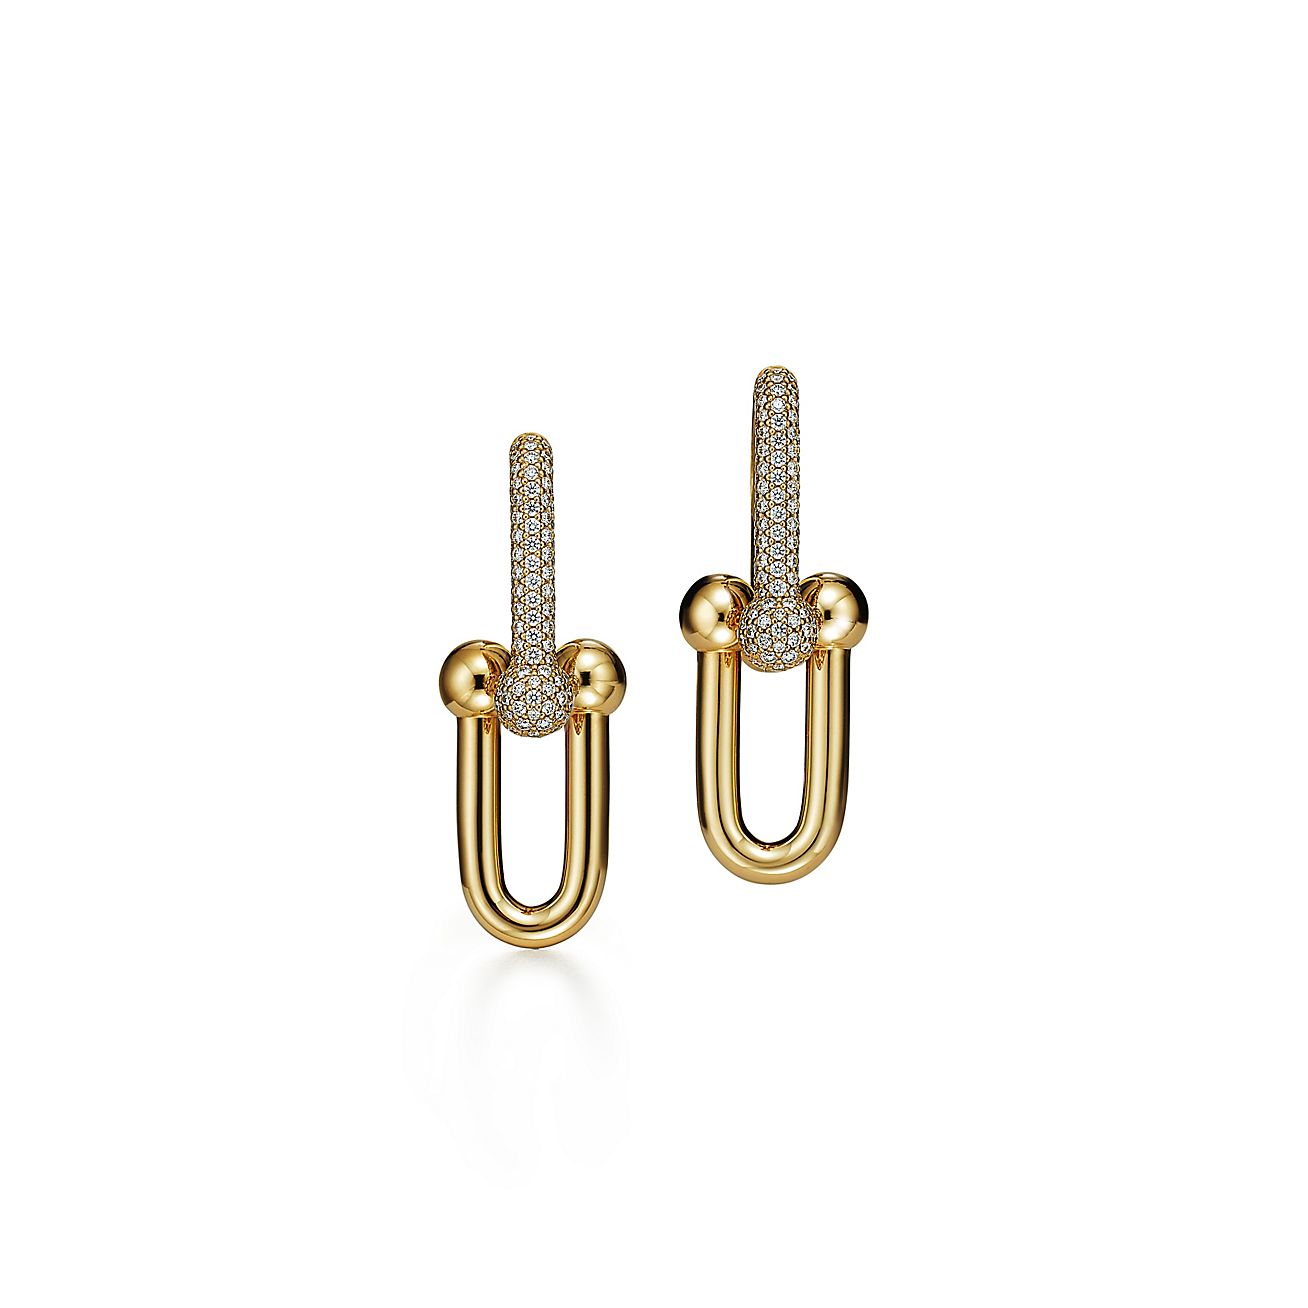 Tiffany HardWear Large Link Earrings in Yellow Gold with Pavé Diamonds |  Tiffany & Co.